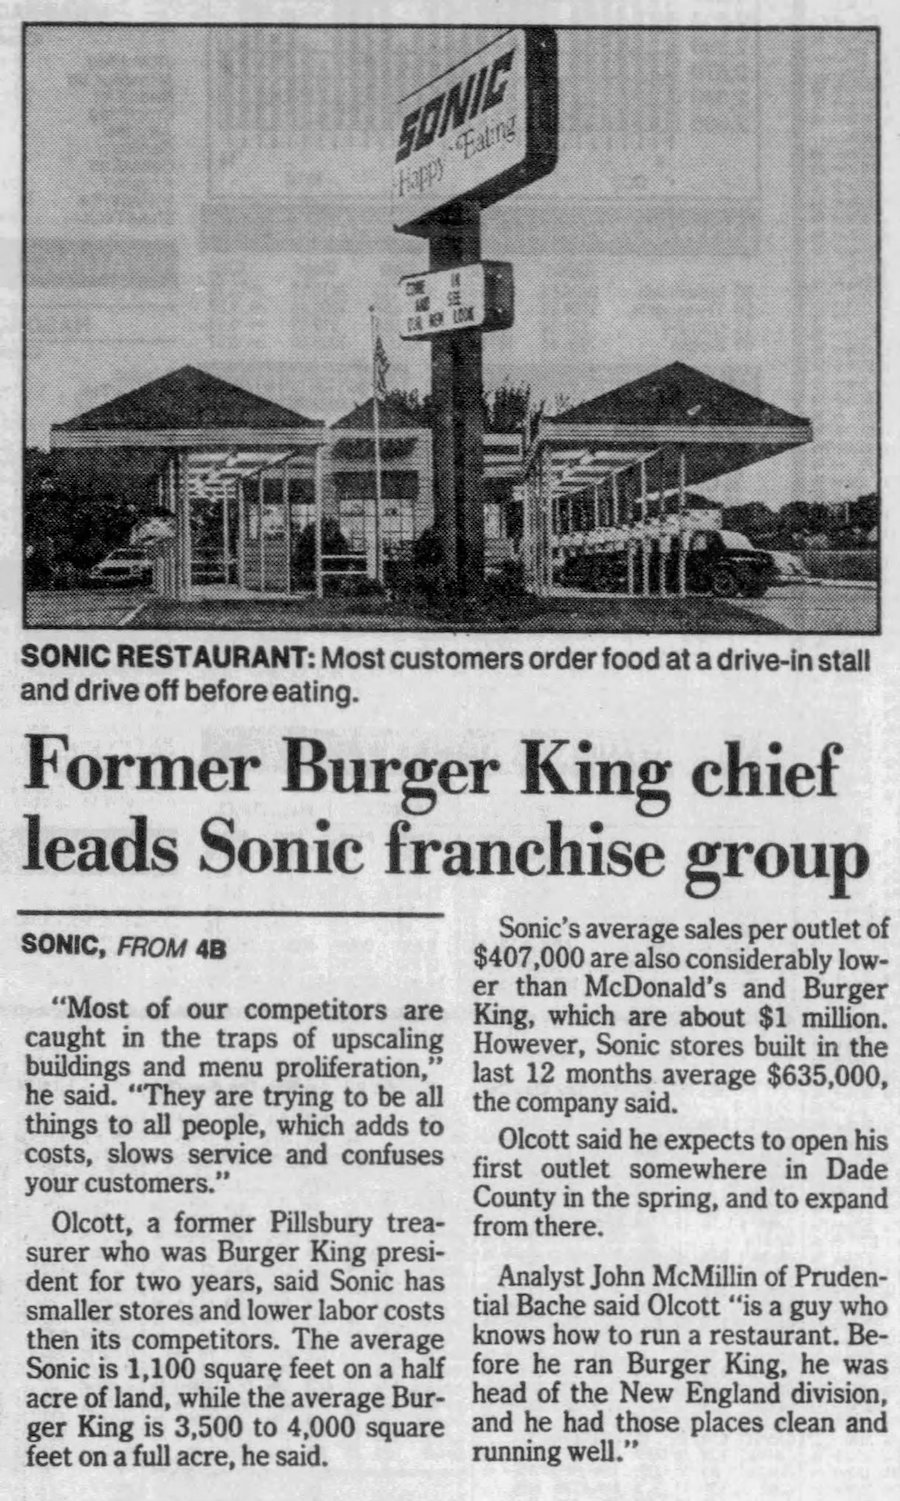 SONIC Drive-In in The Miami Herald -November 14th, 1989